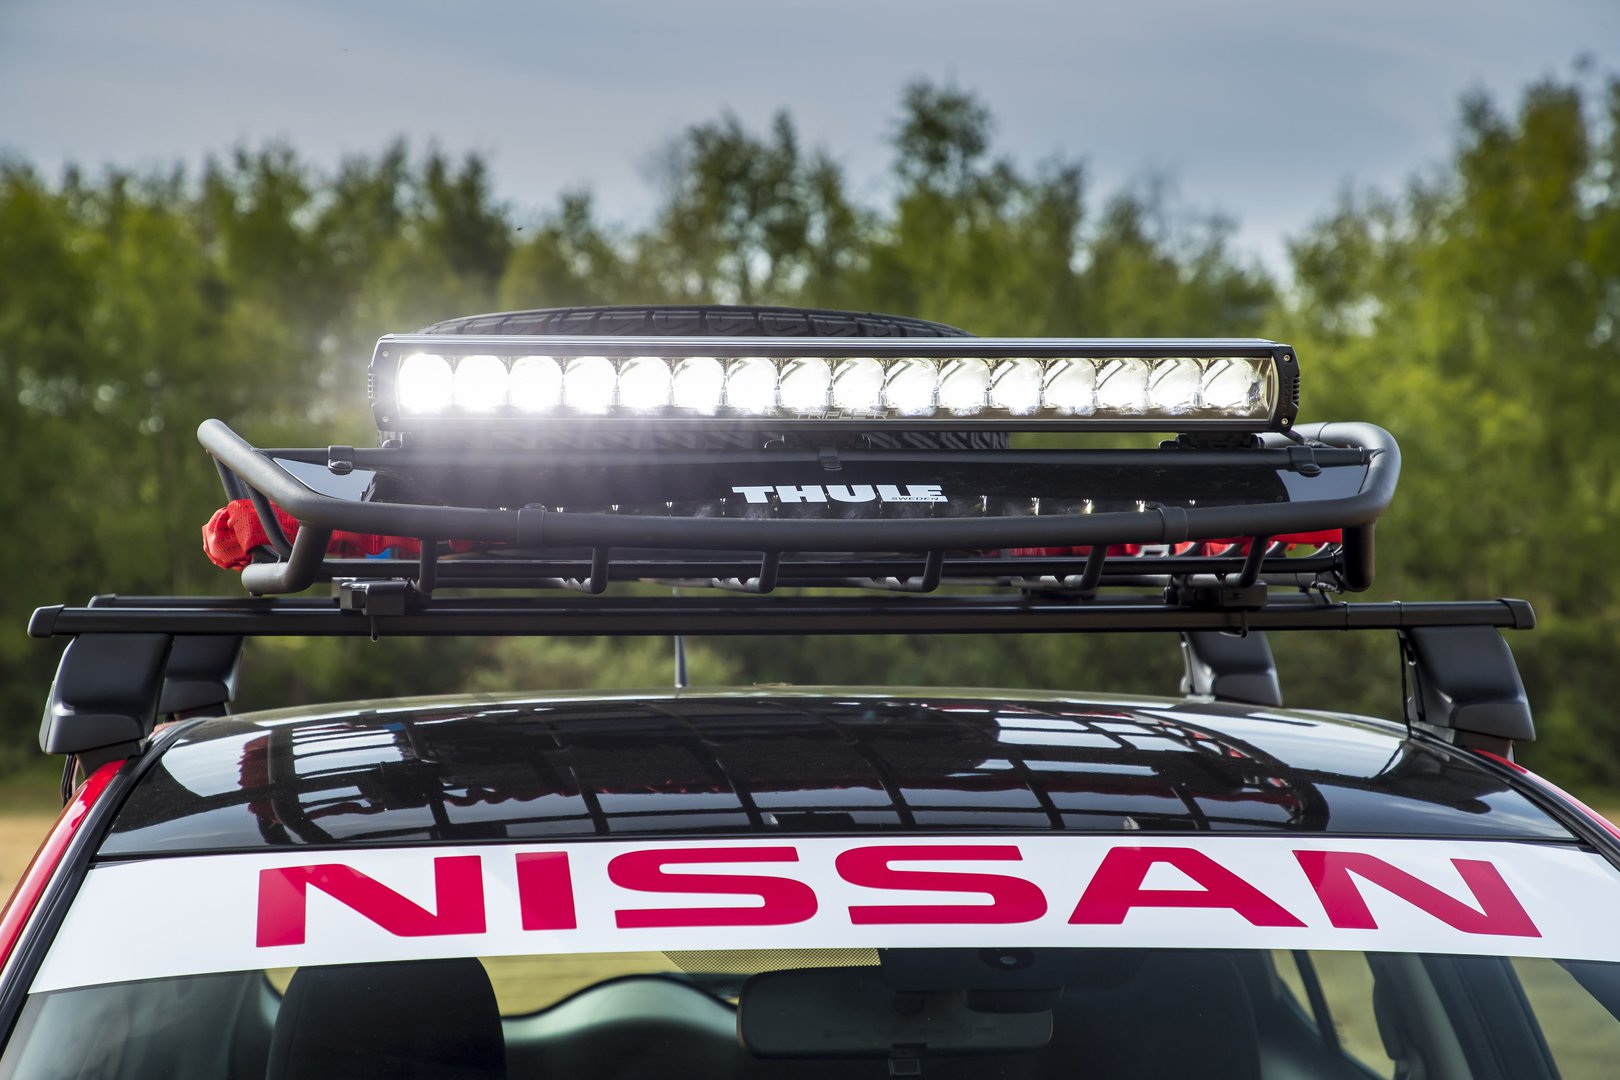 Nissan leaf roof rack